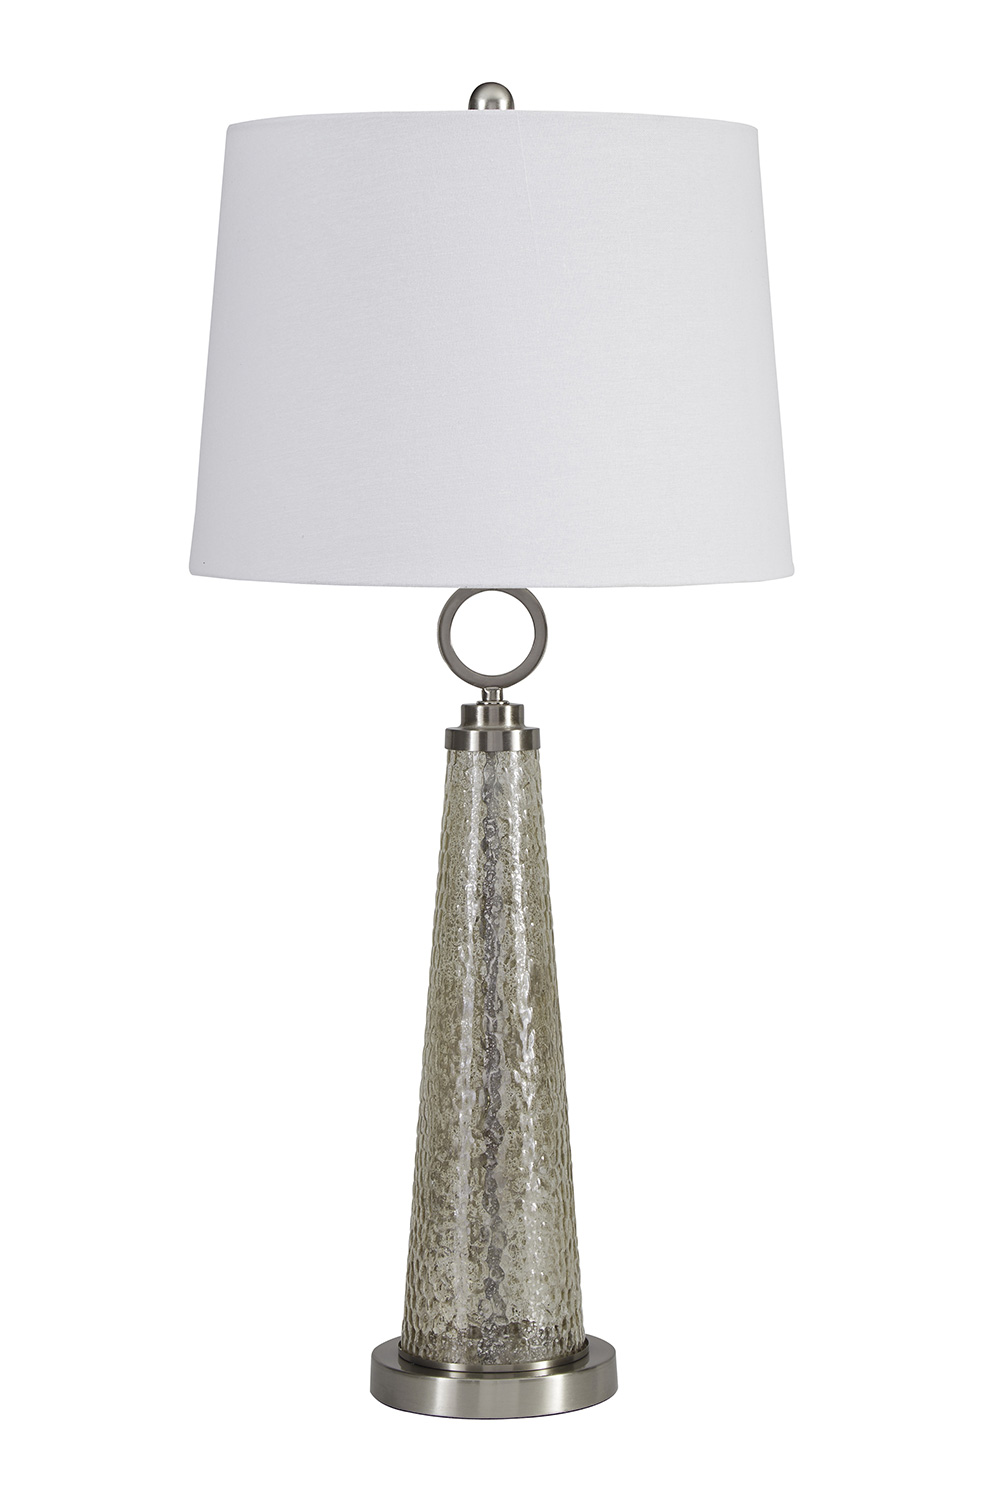 Ashley Arama Glass Table Lamp